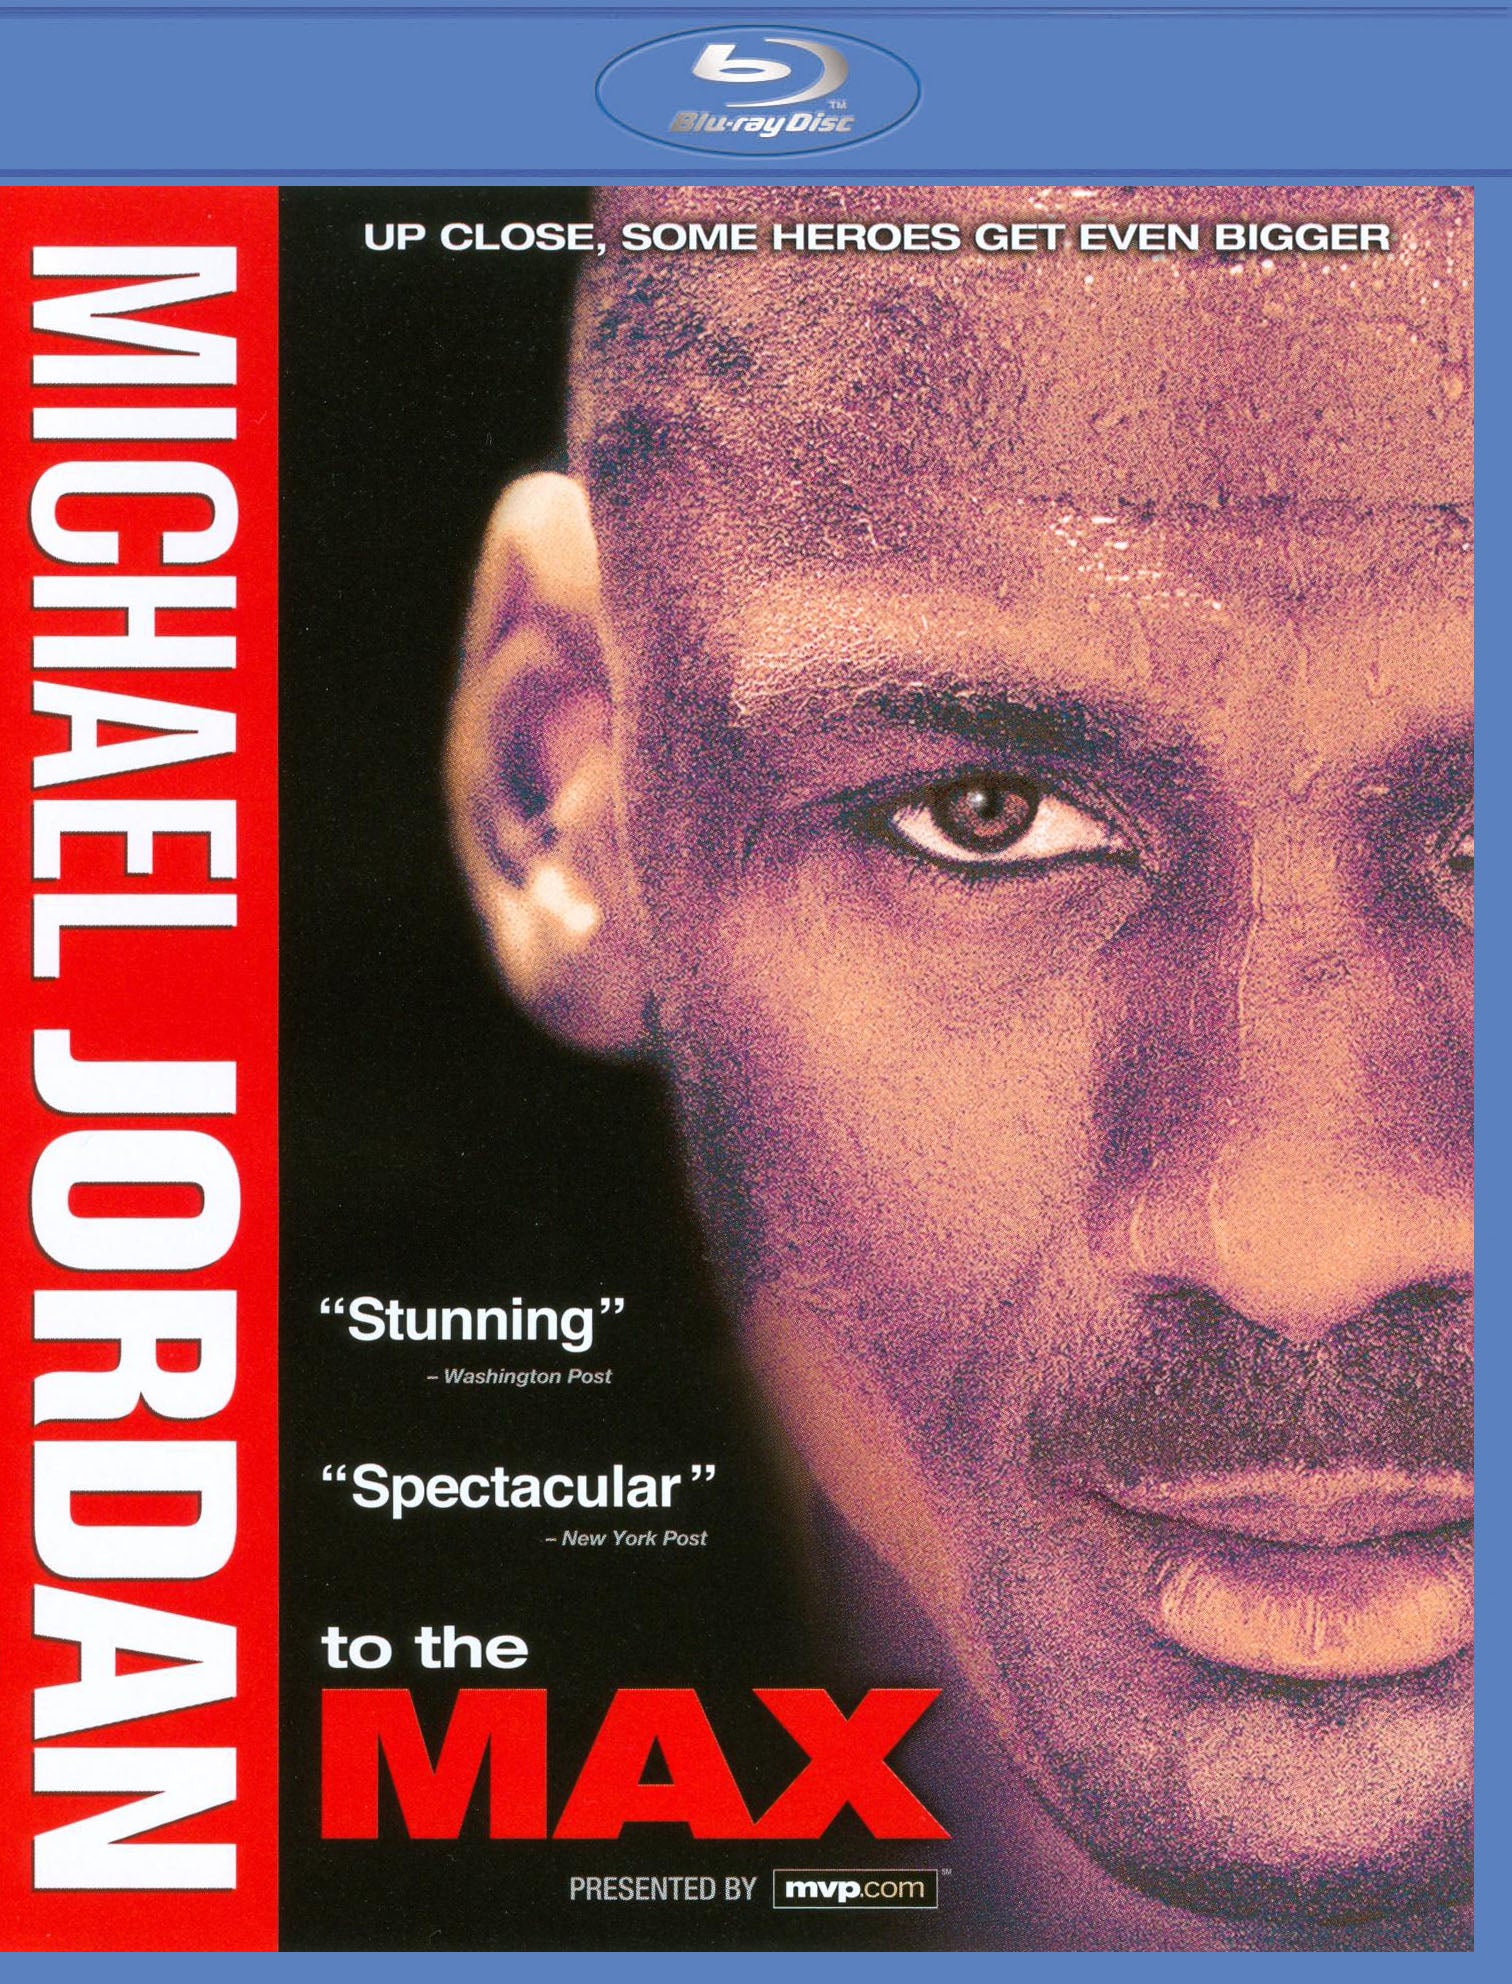 Michael Jordan to the Max [Blu-ray] cover art